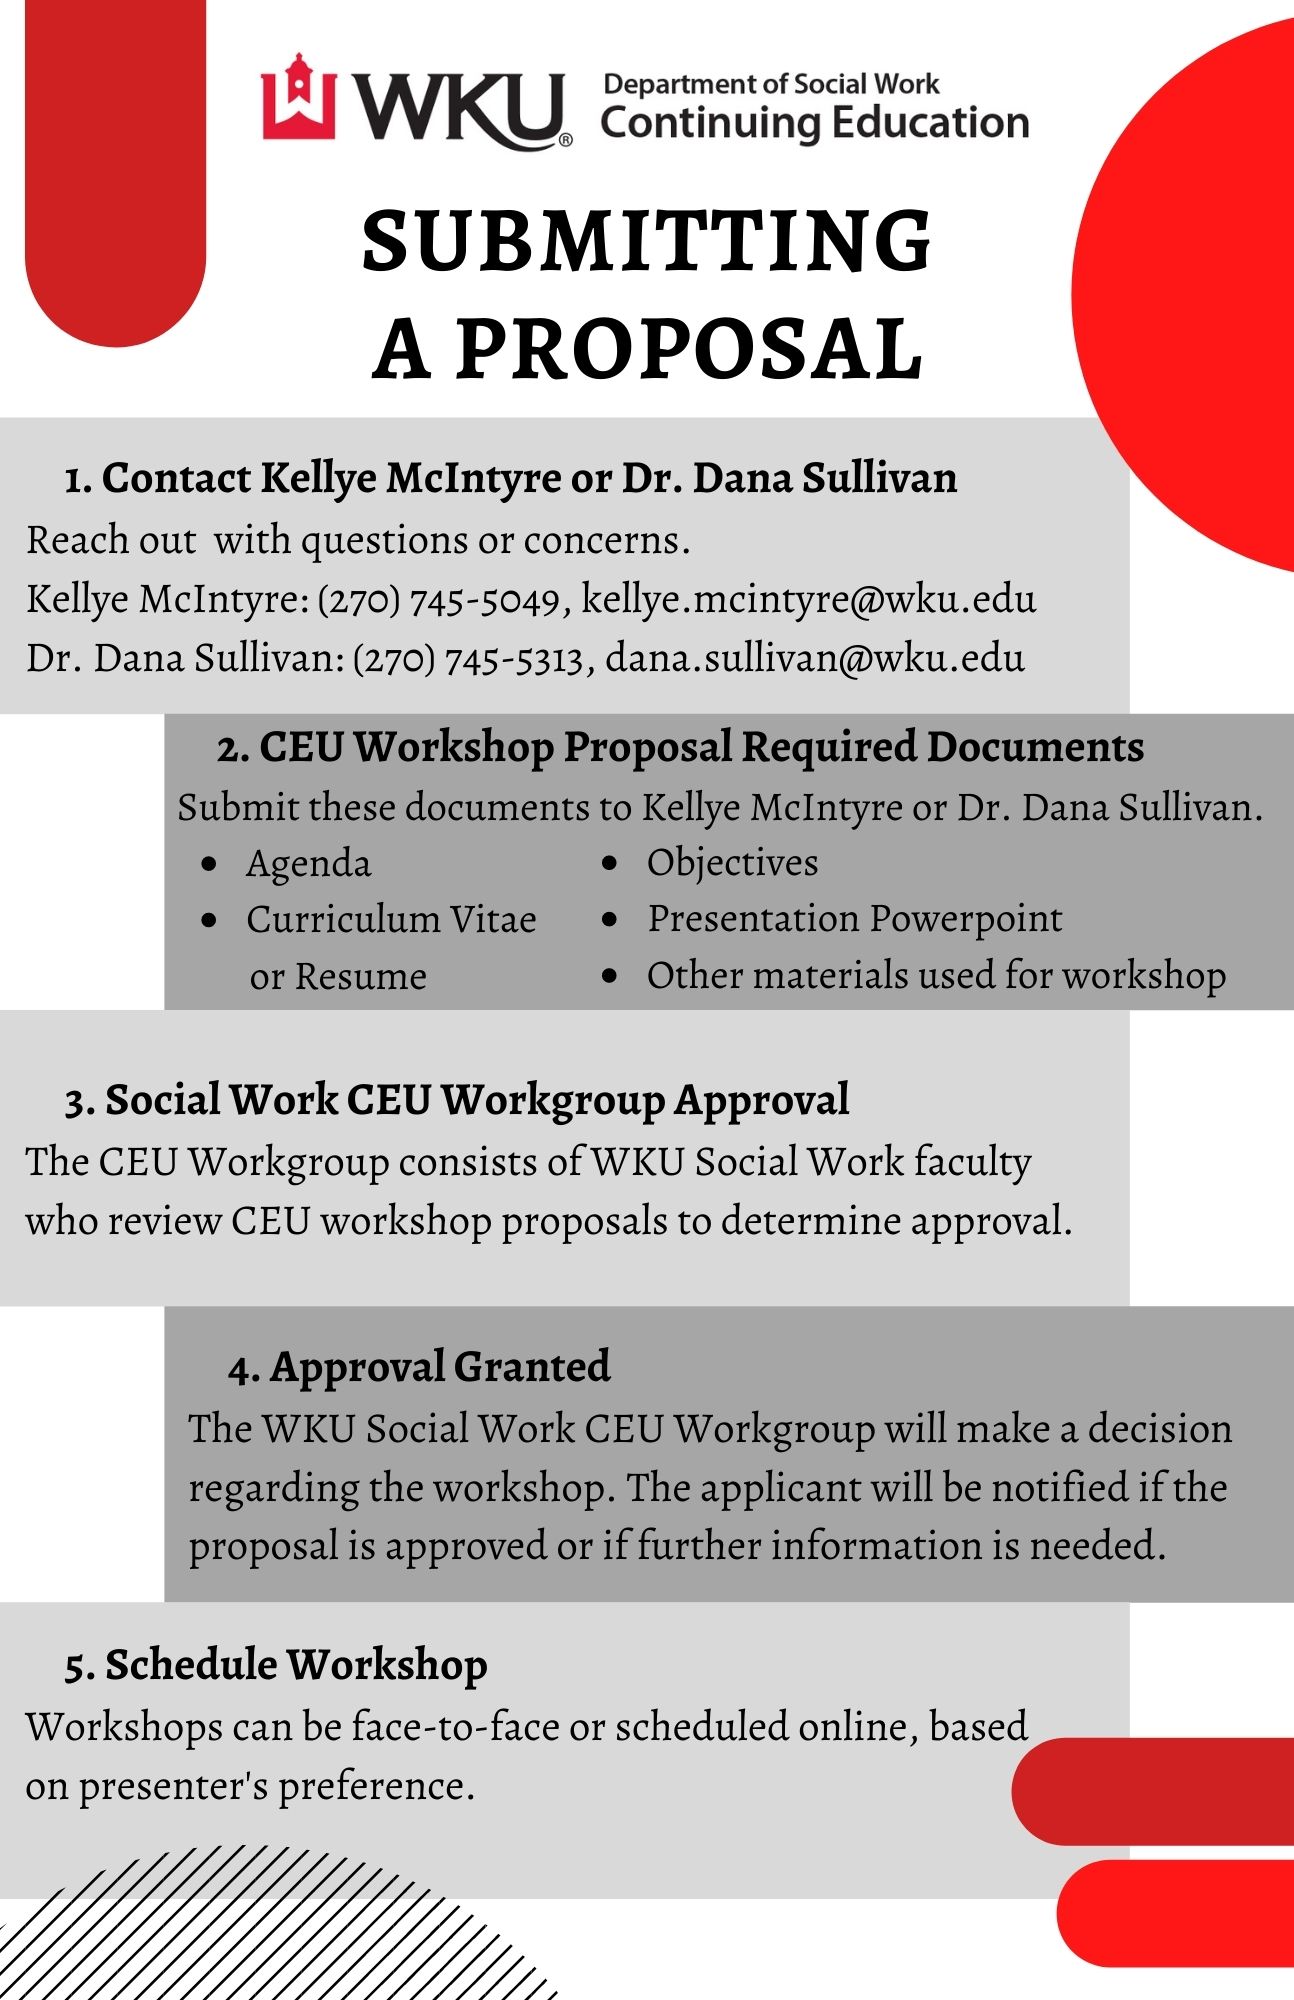 CEU Proposal Submission Process